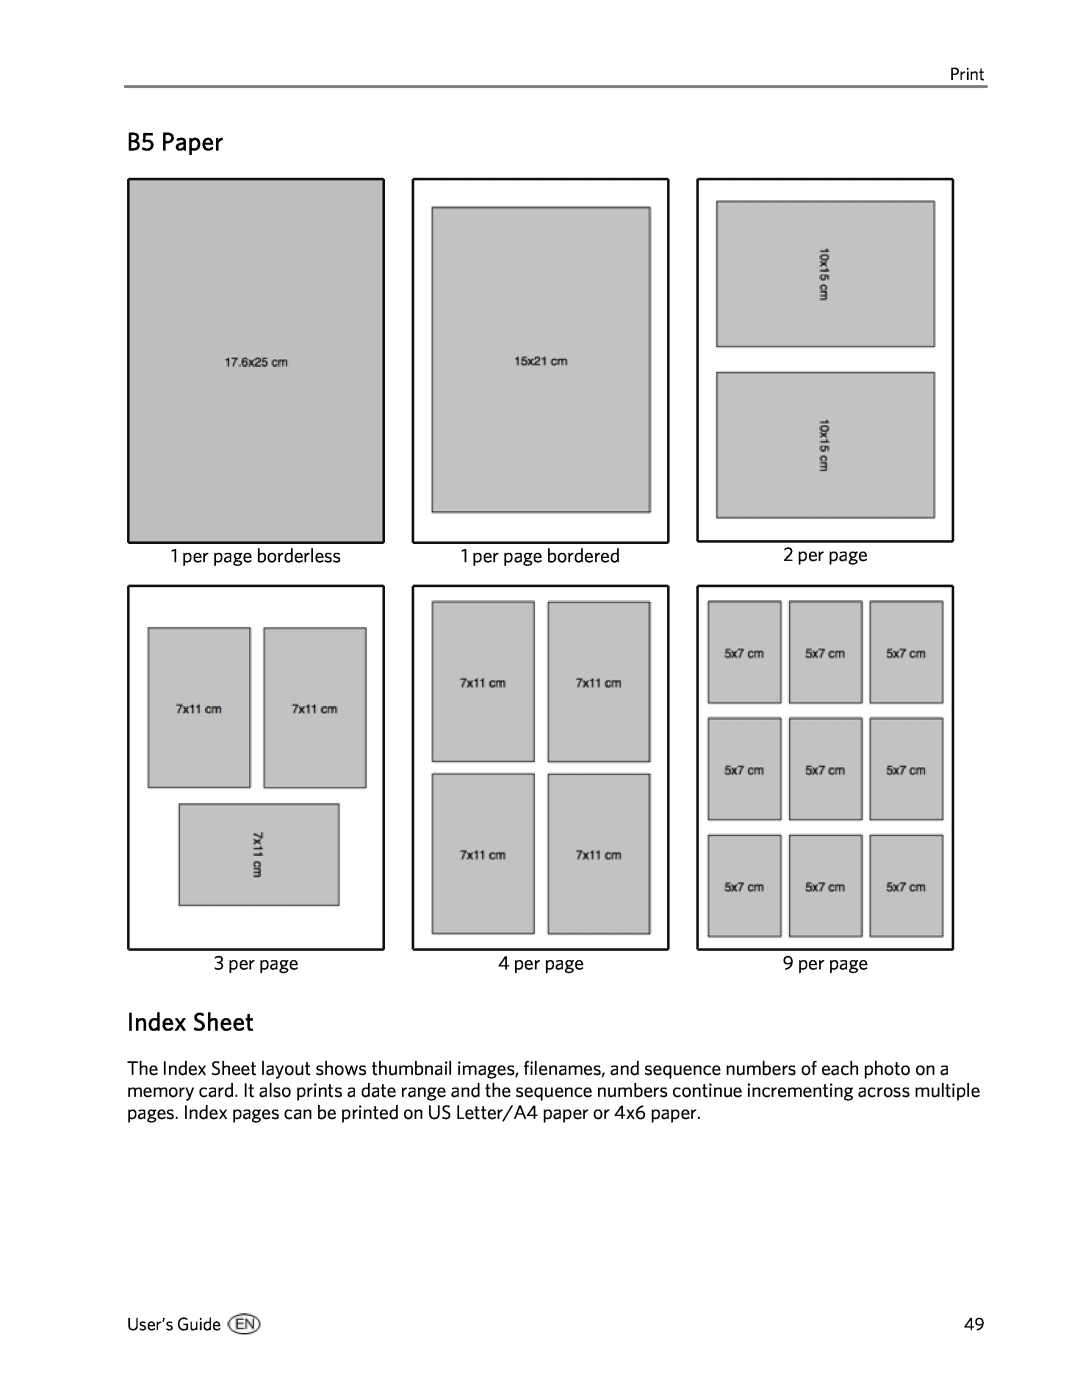 Kodak 5300 manual B5 Paper, Index Sheet, per page borderless, per page bordered 